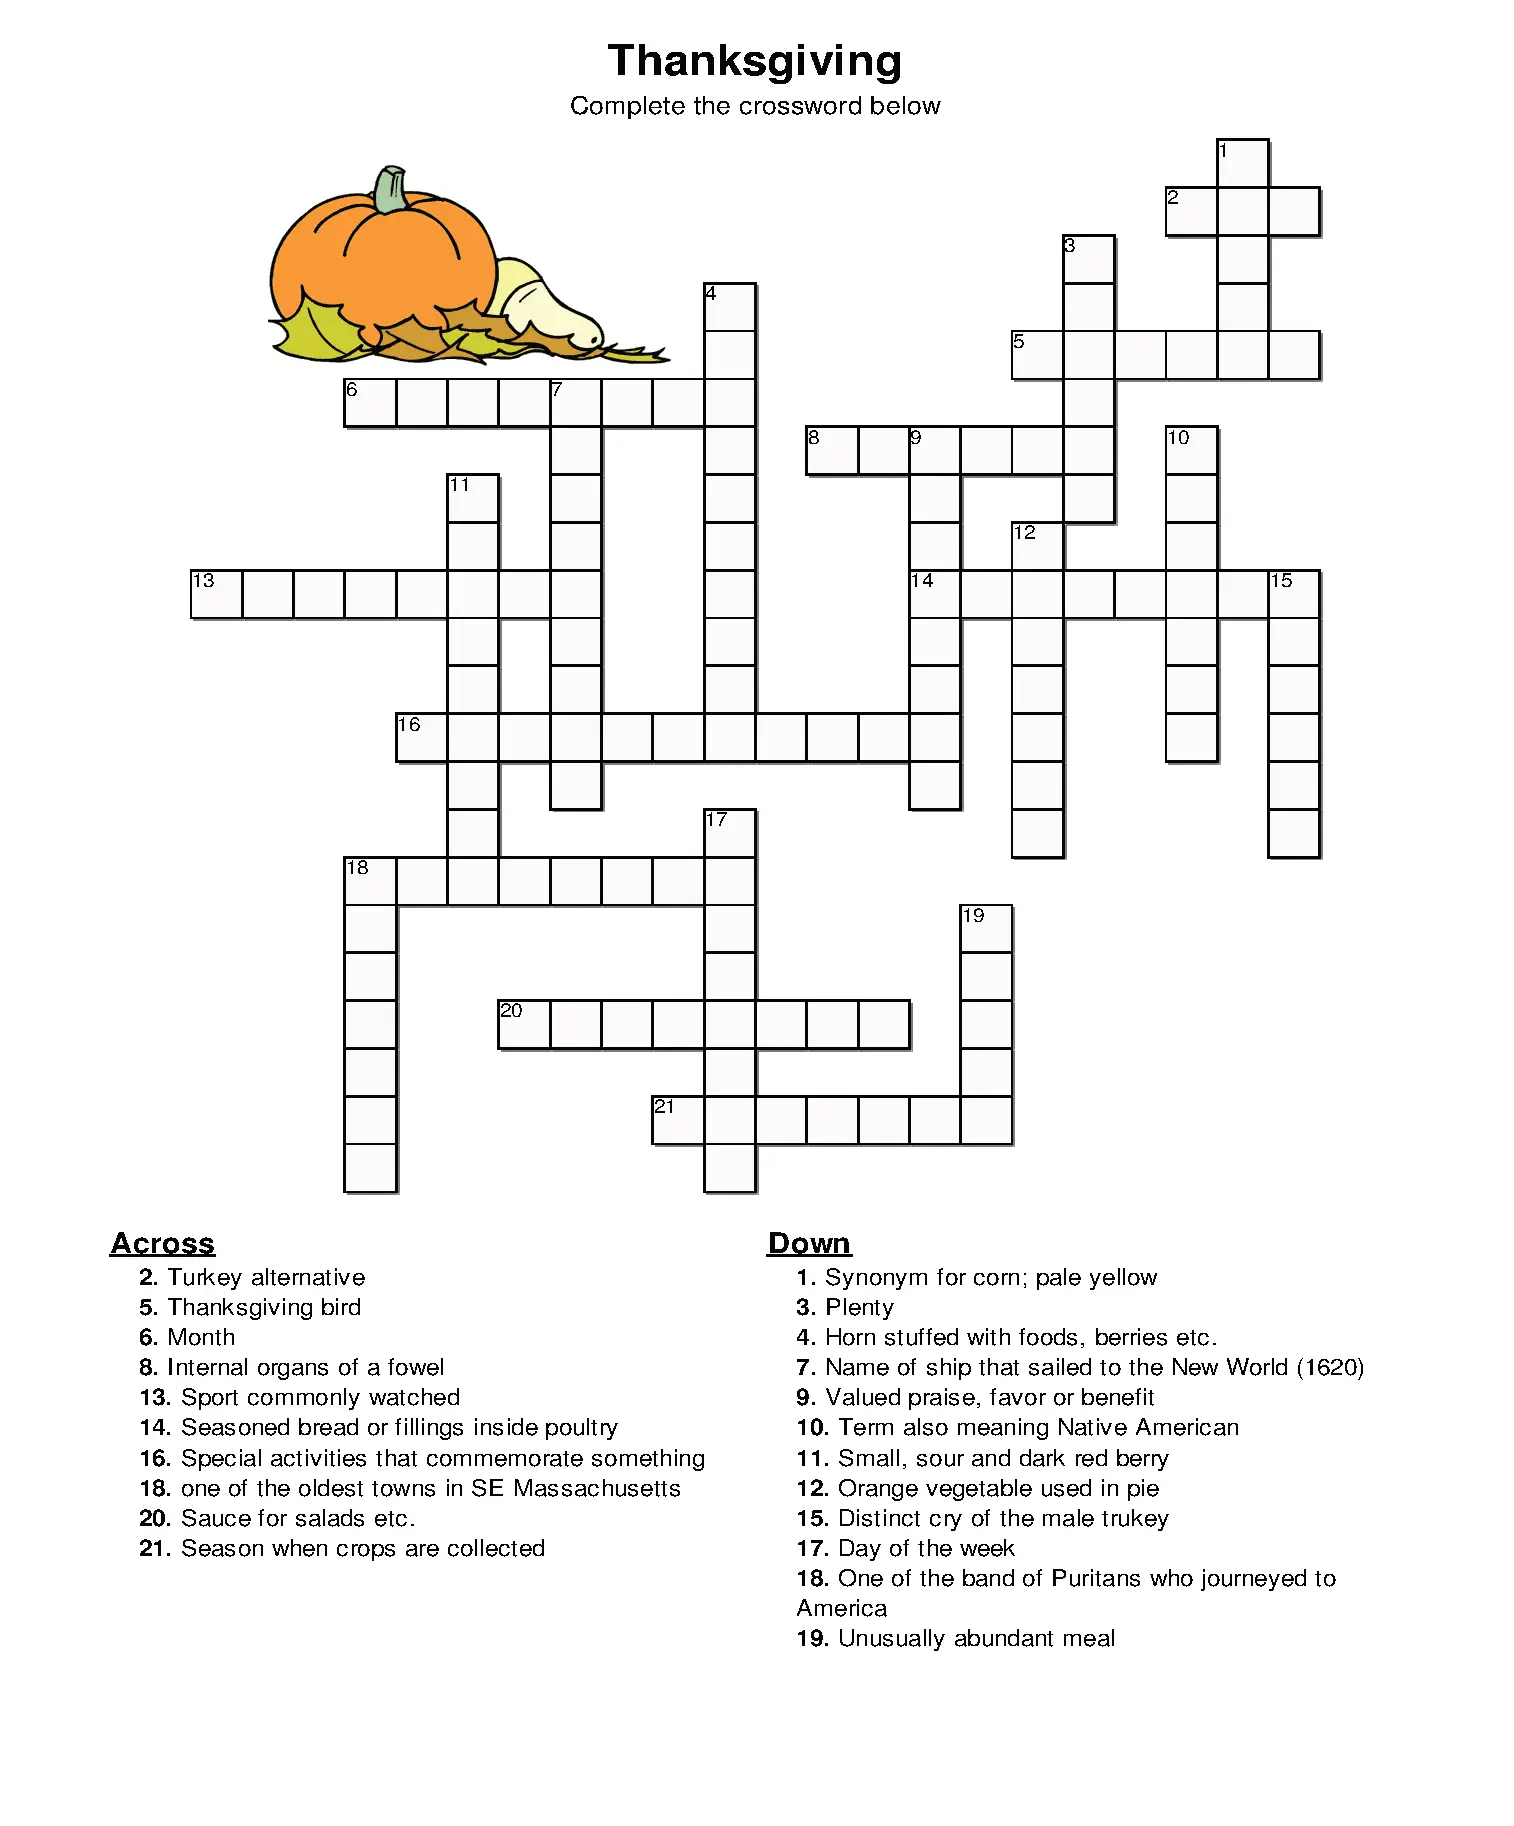 10 Superfun Thanksgiving Crossword Puzzles - Kitty Baby Love